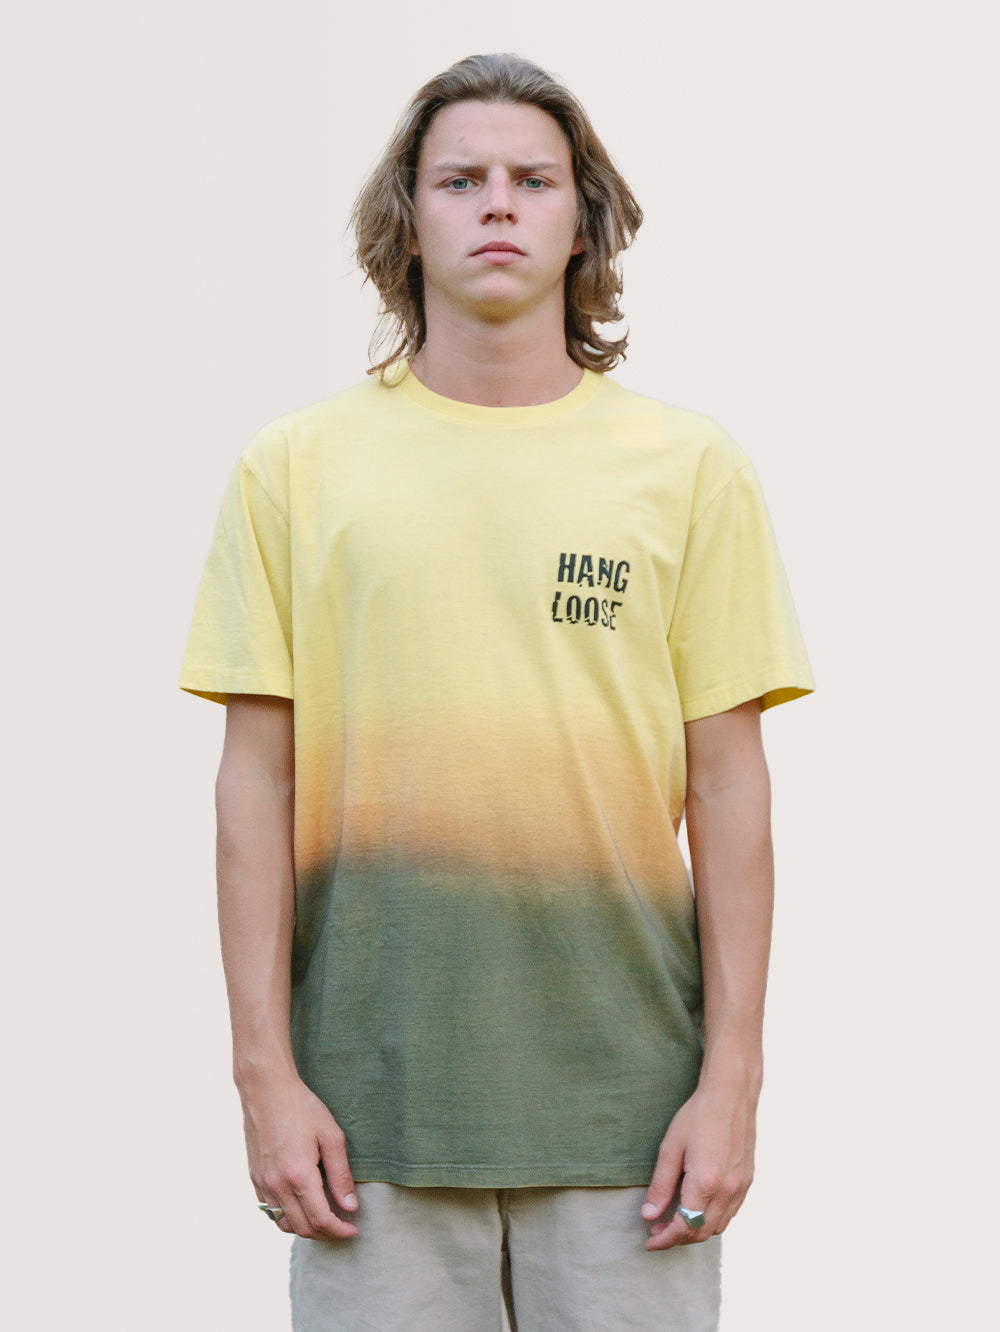 Camiseta Hang Loose  Wildguys Preto e Amarelo